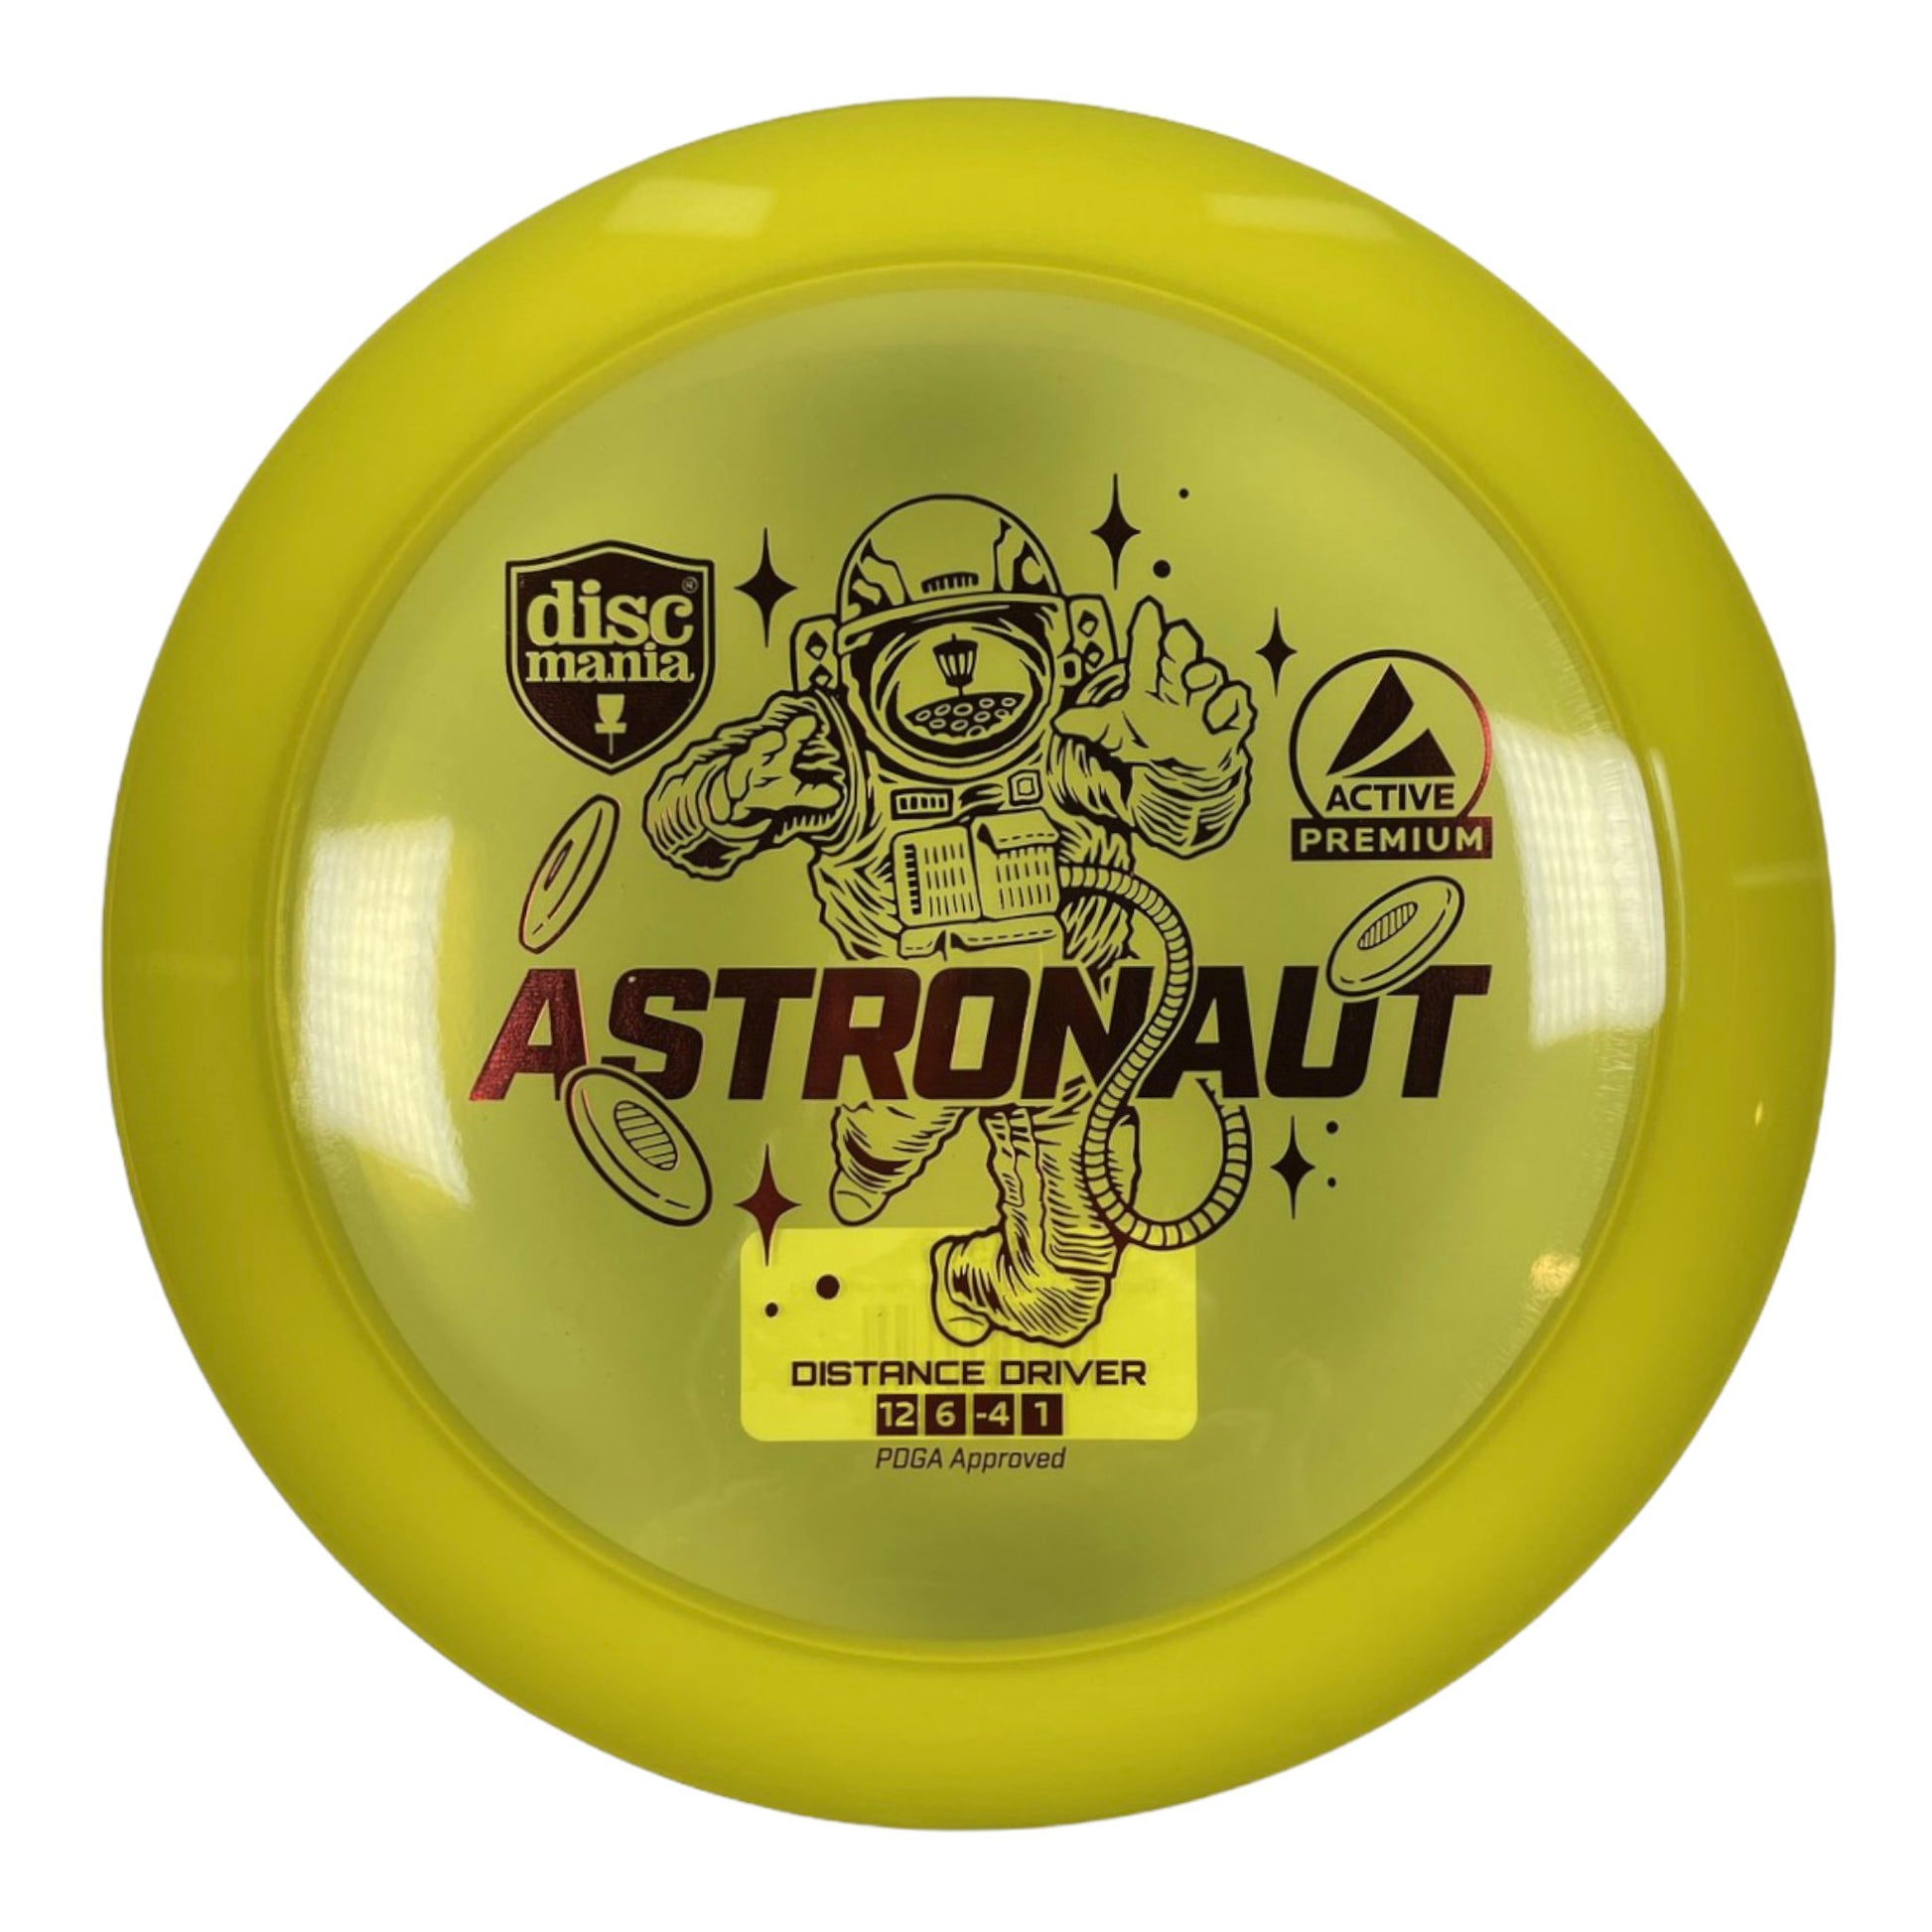 Discmania Astronaut | Active Premium | Yellow/Red 172-173g Disc Golf